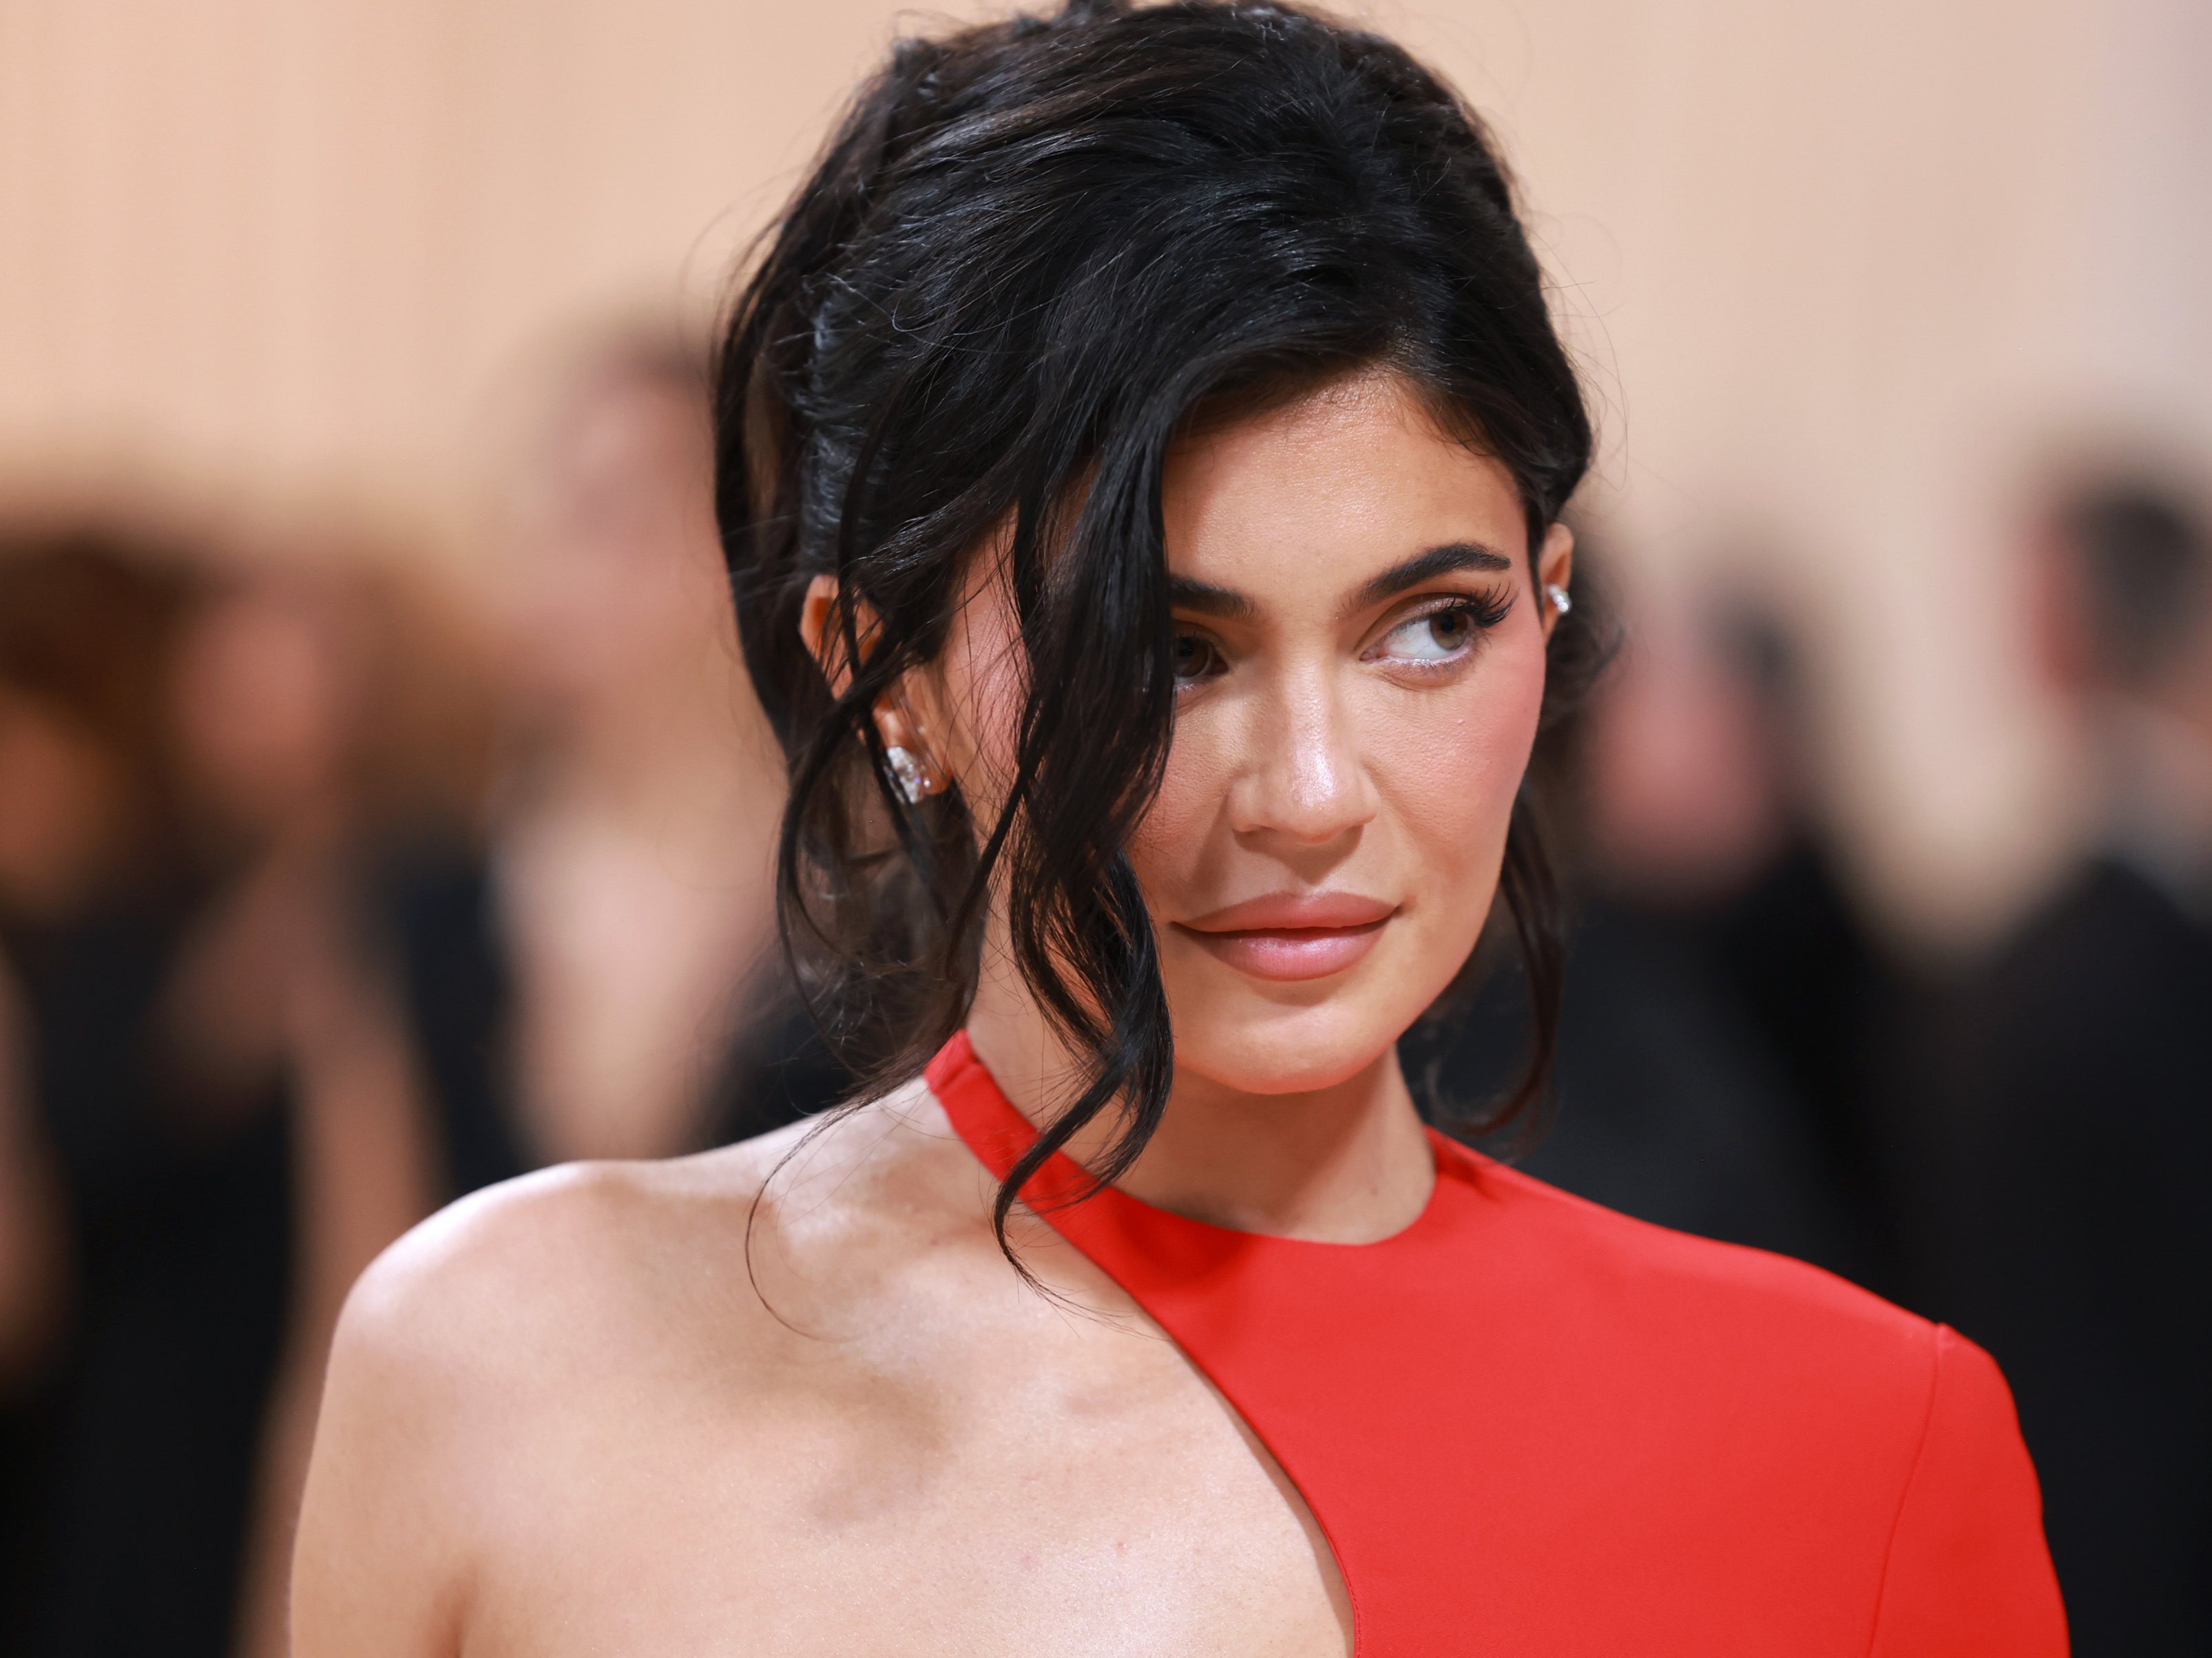 Kylie Jenner and Timothee Chalamet Split: She 'Got Dumped